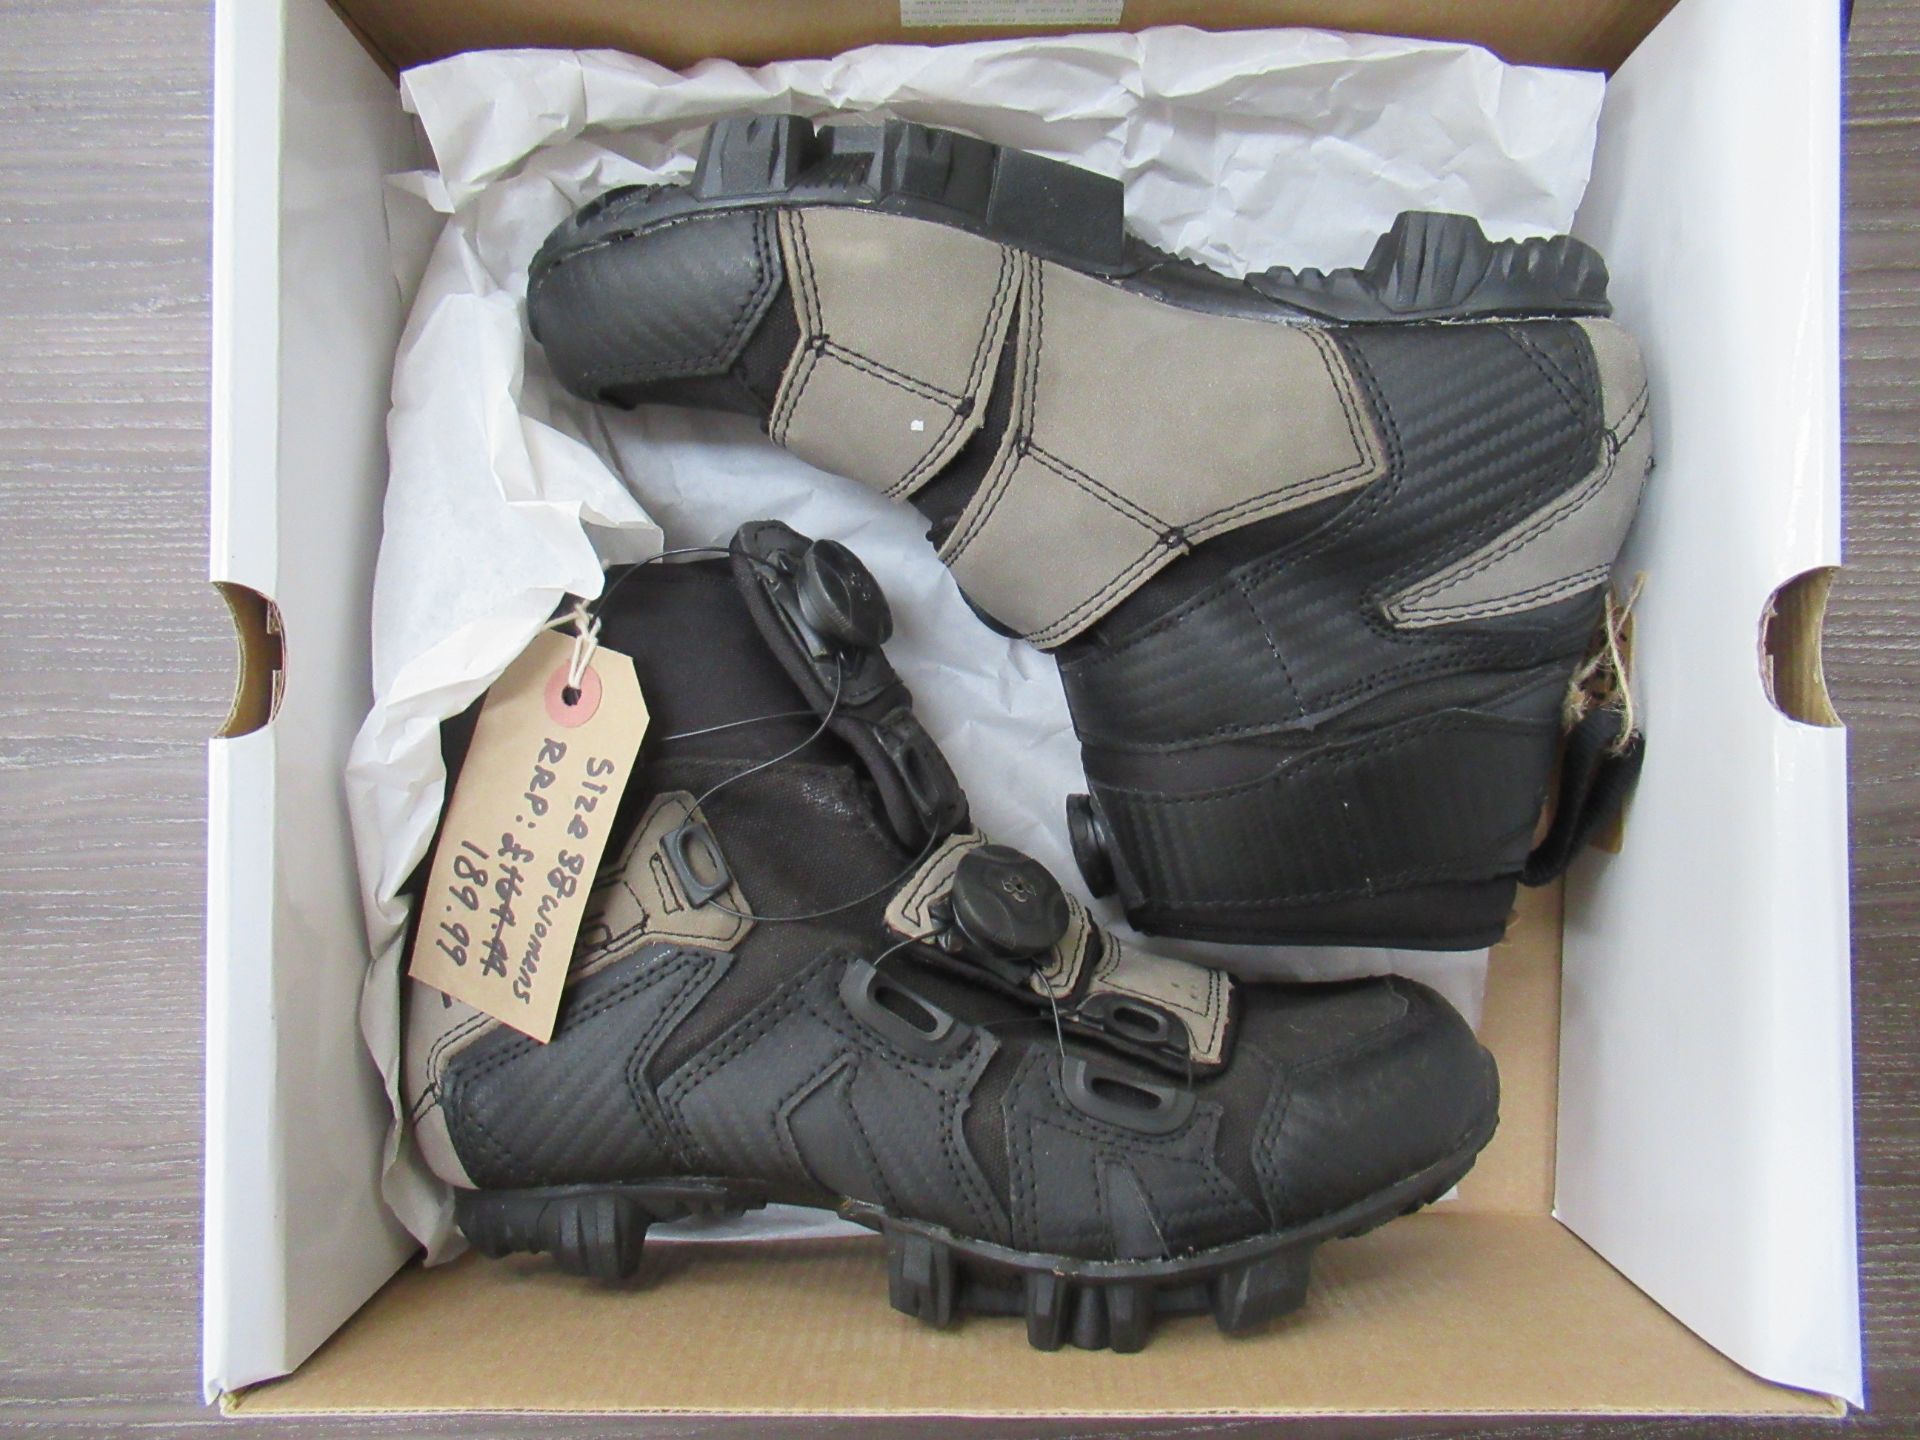 Pair of Lake MX145-W cycling boots (black/grey) - boxed EU size 38 (RRP£189.99)